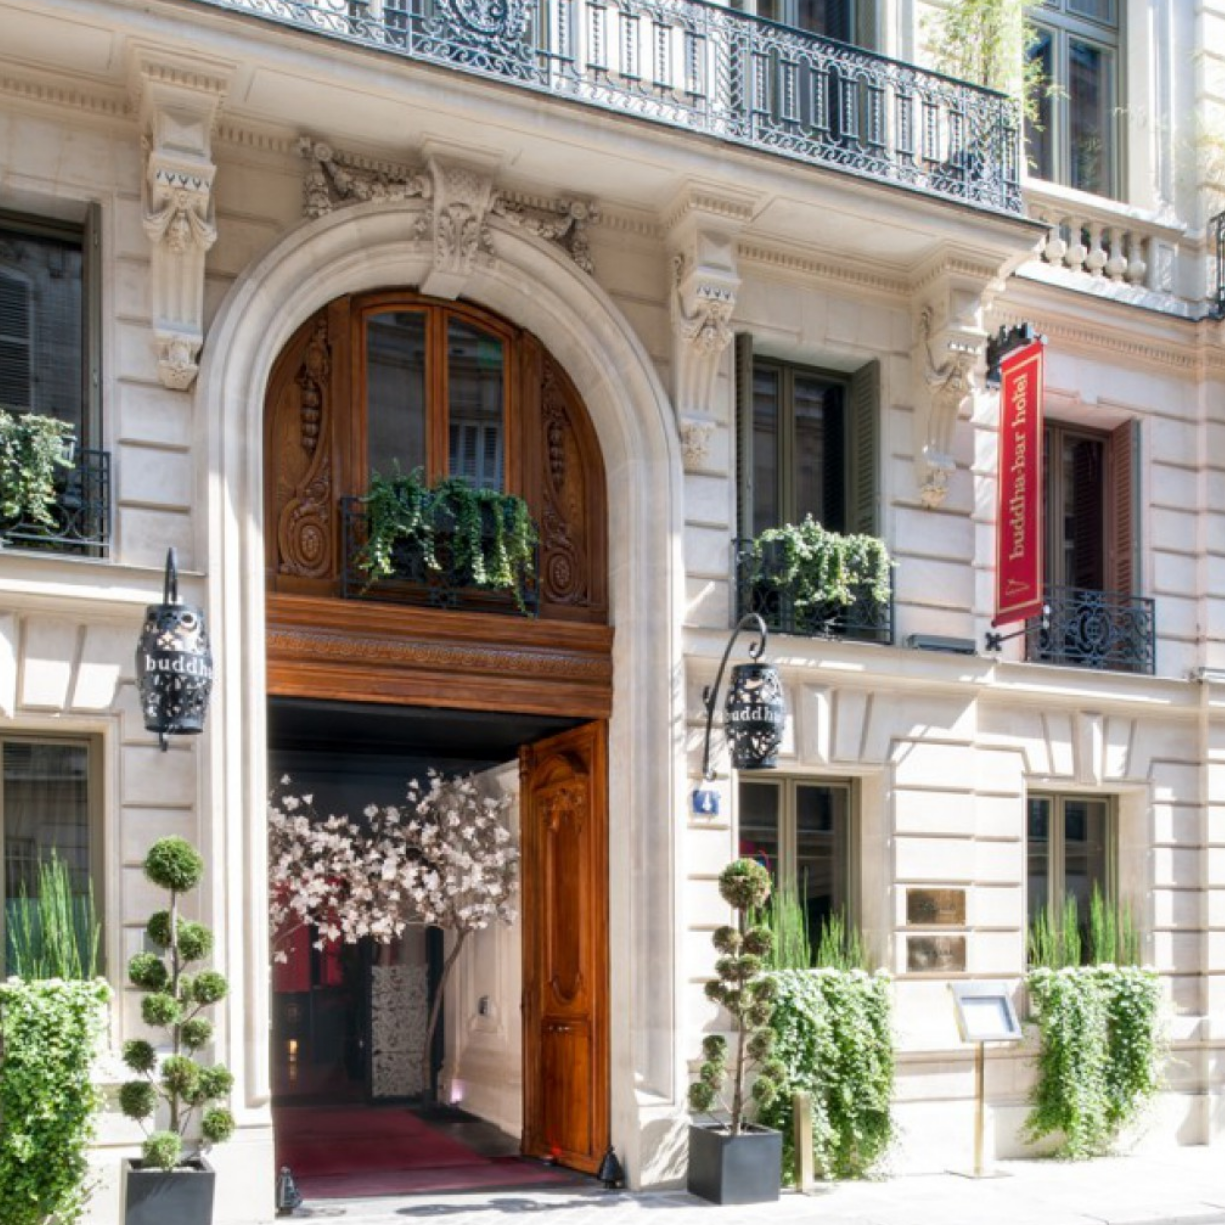 Luxury hotels: The Buddha-Bar Hotel Paris